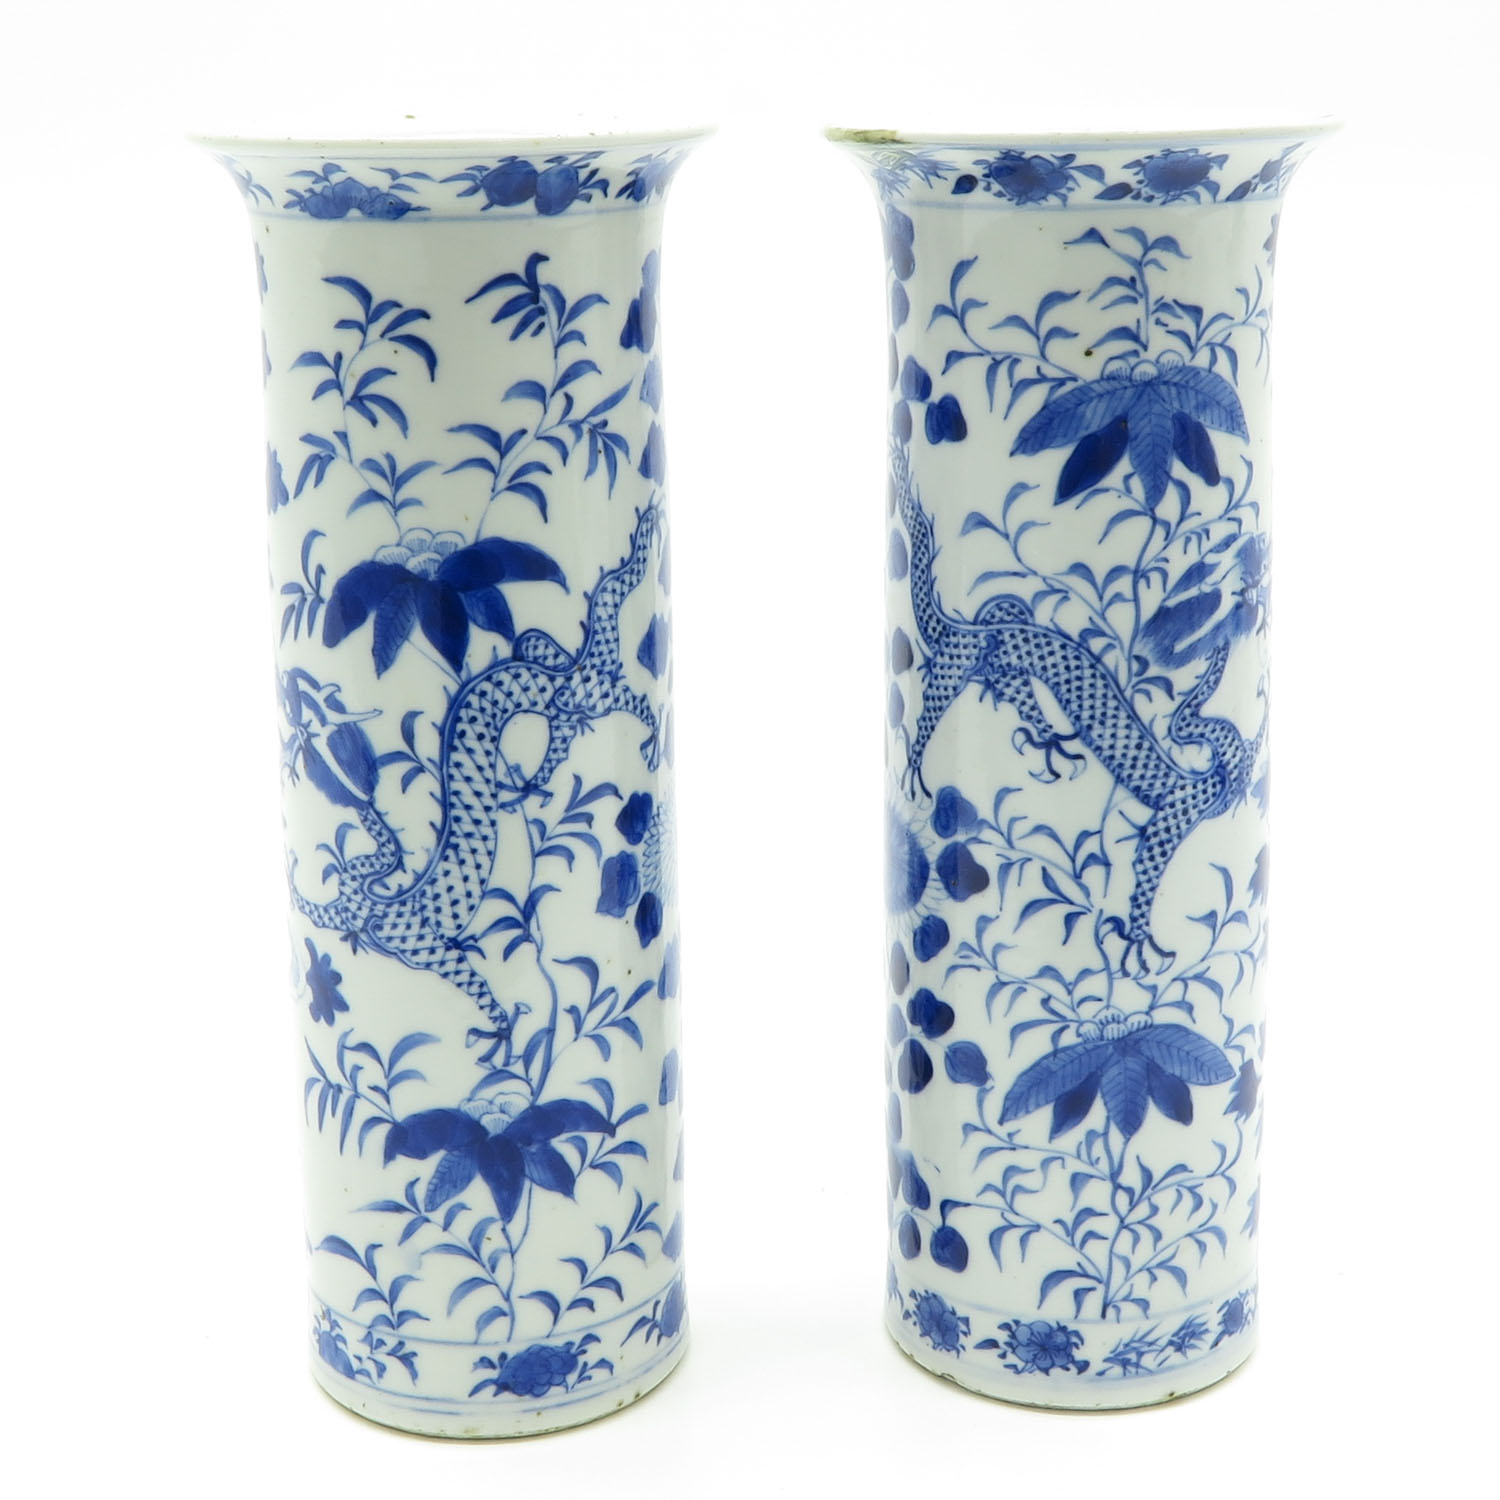 Lot of 2 China Porcelain Vases - Image 3 of 6